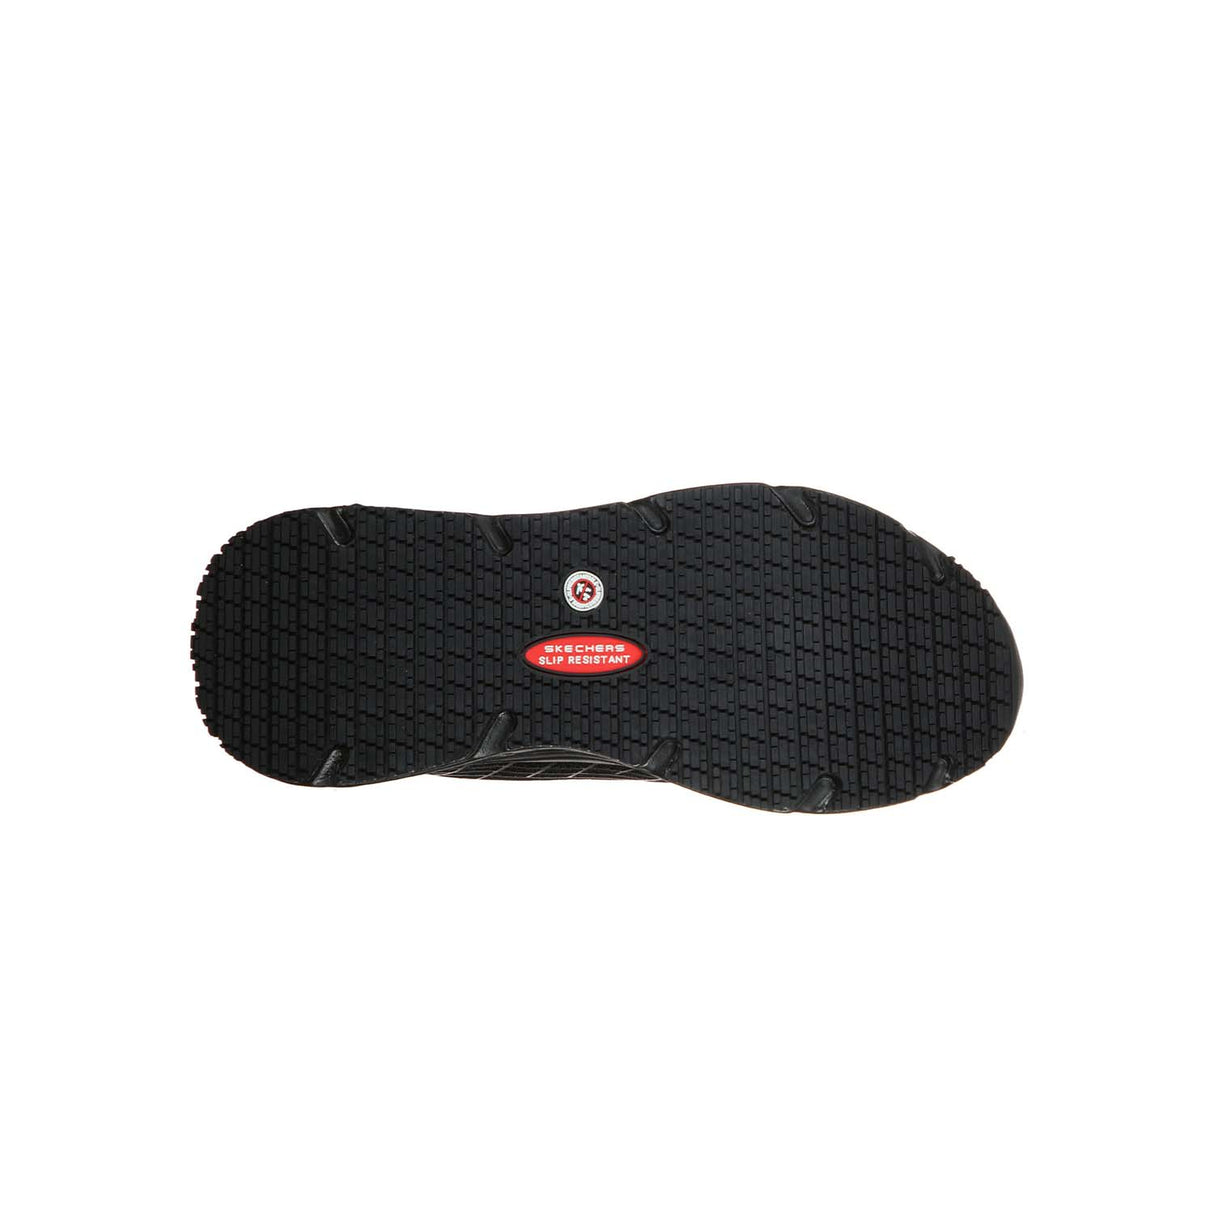 Skechers Comfort Flex HC Pro SR Shoe 108016-3